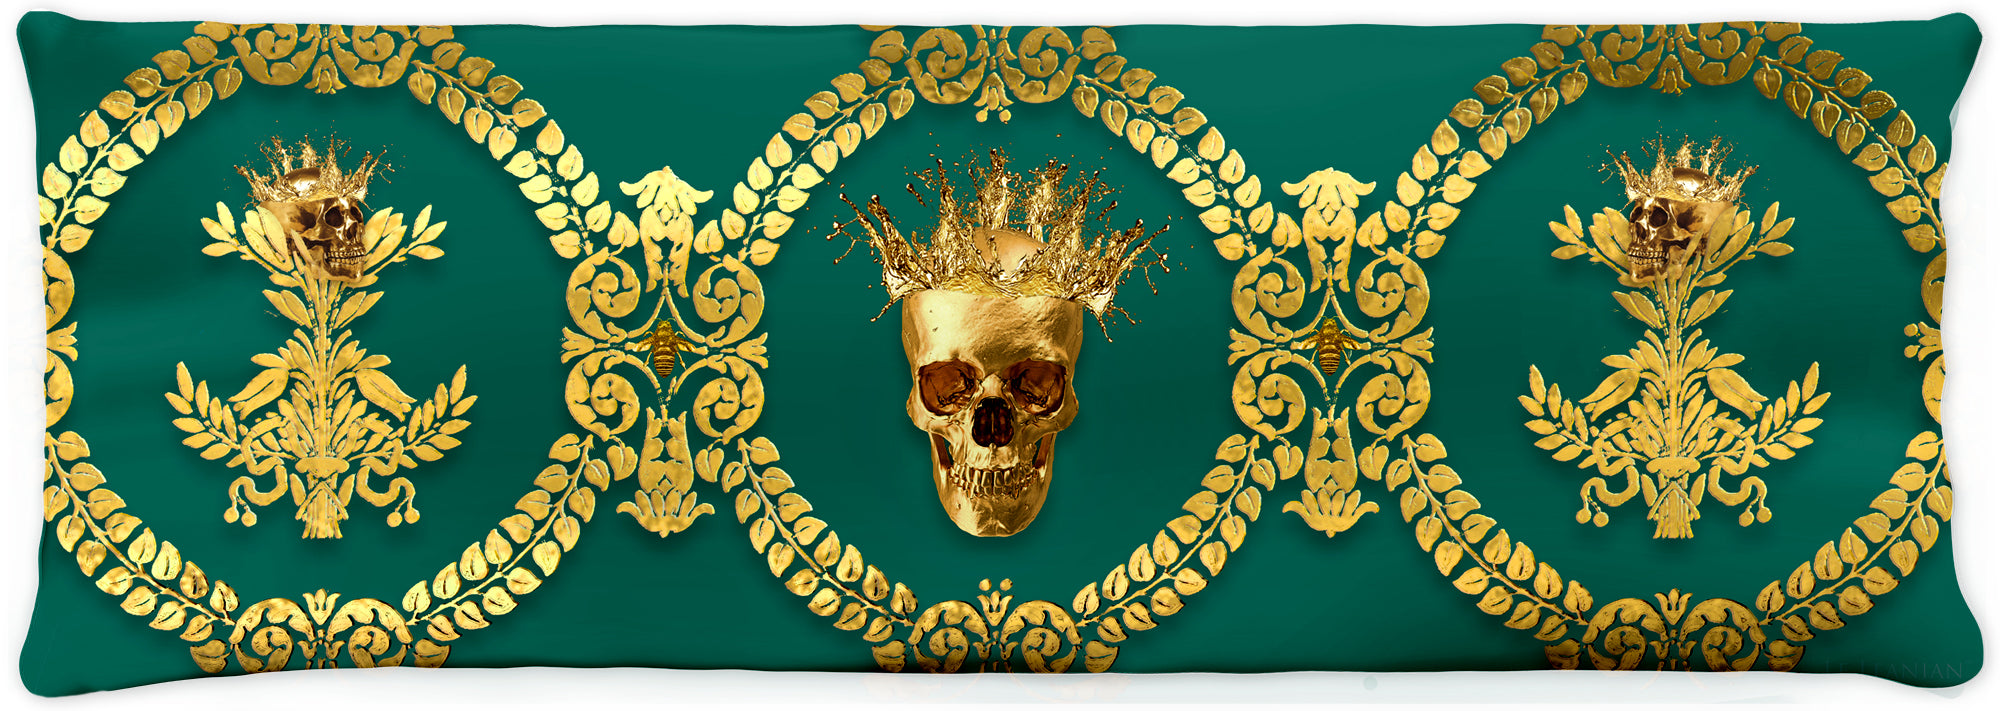 CROWN GOLD SKULL-GOLD RIBS-Body Pillow-PILLOW CASE- color JADE, GREEN, BLUE GREEN